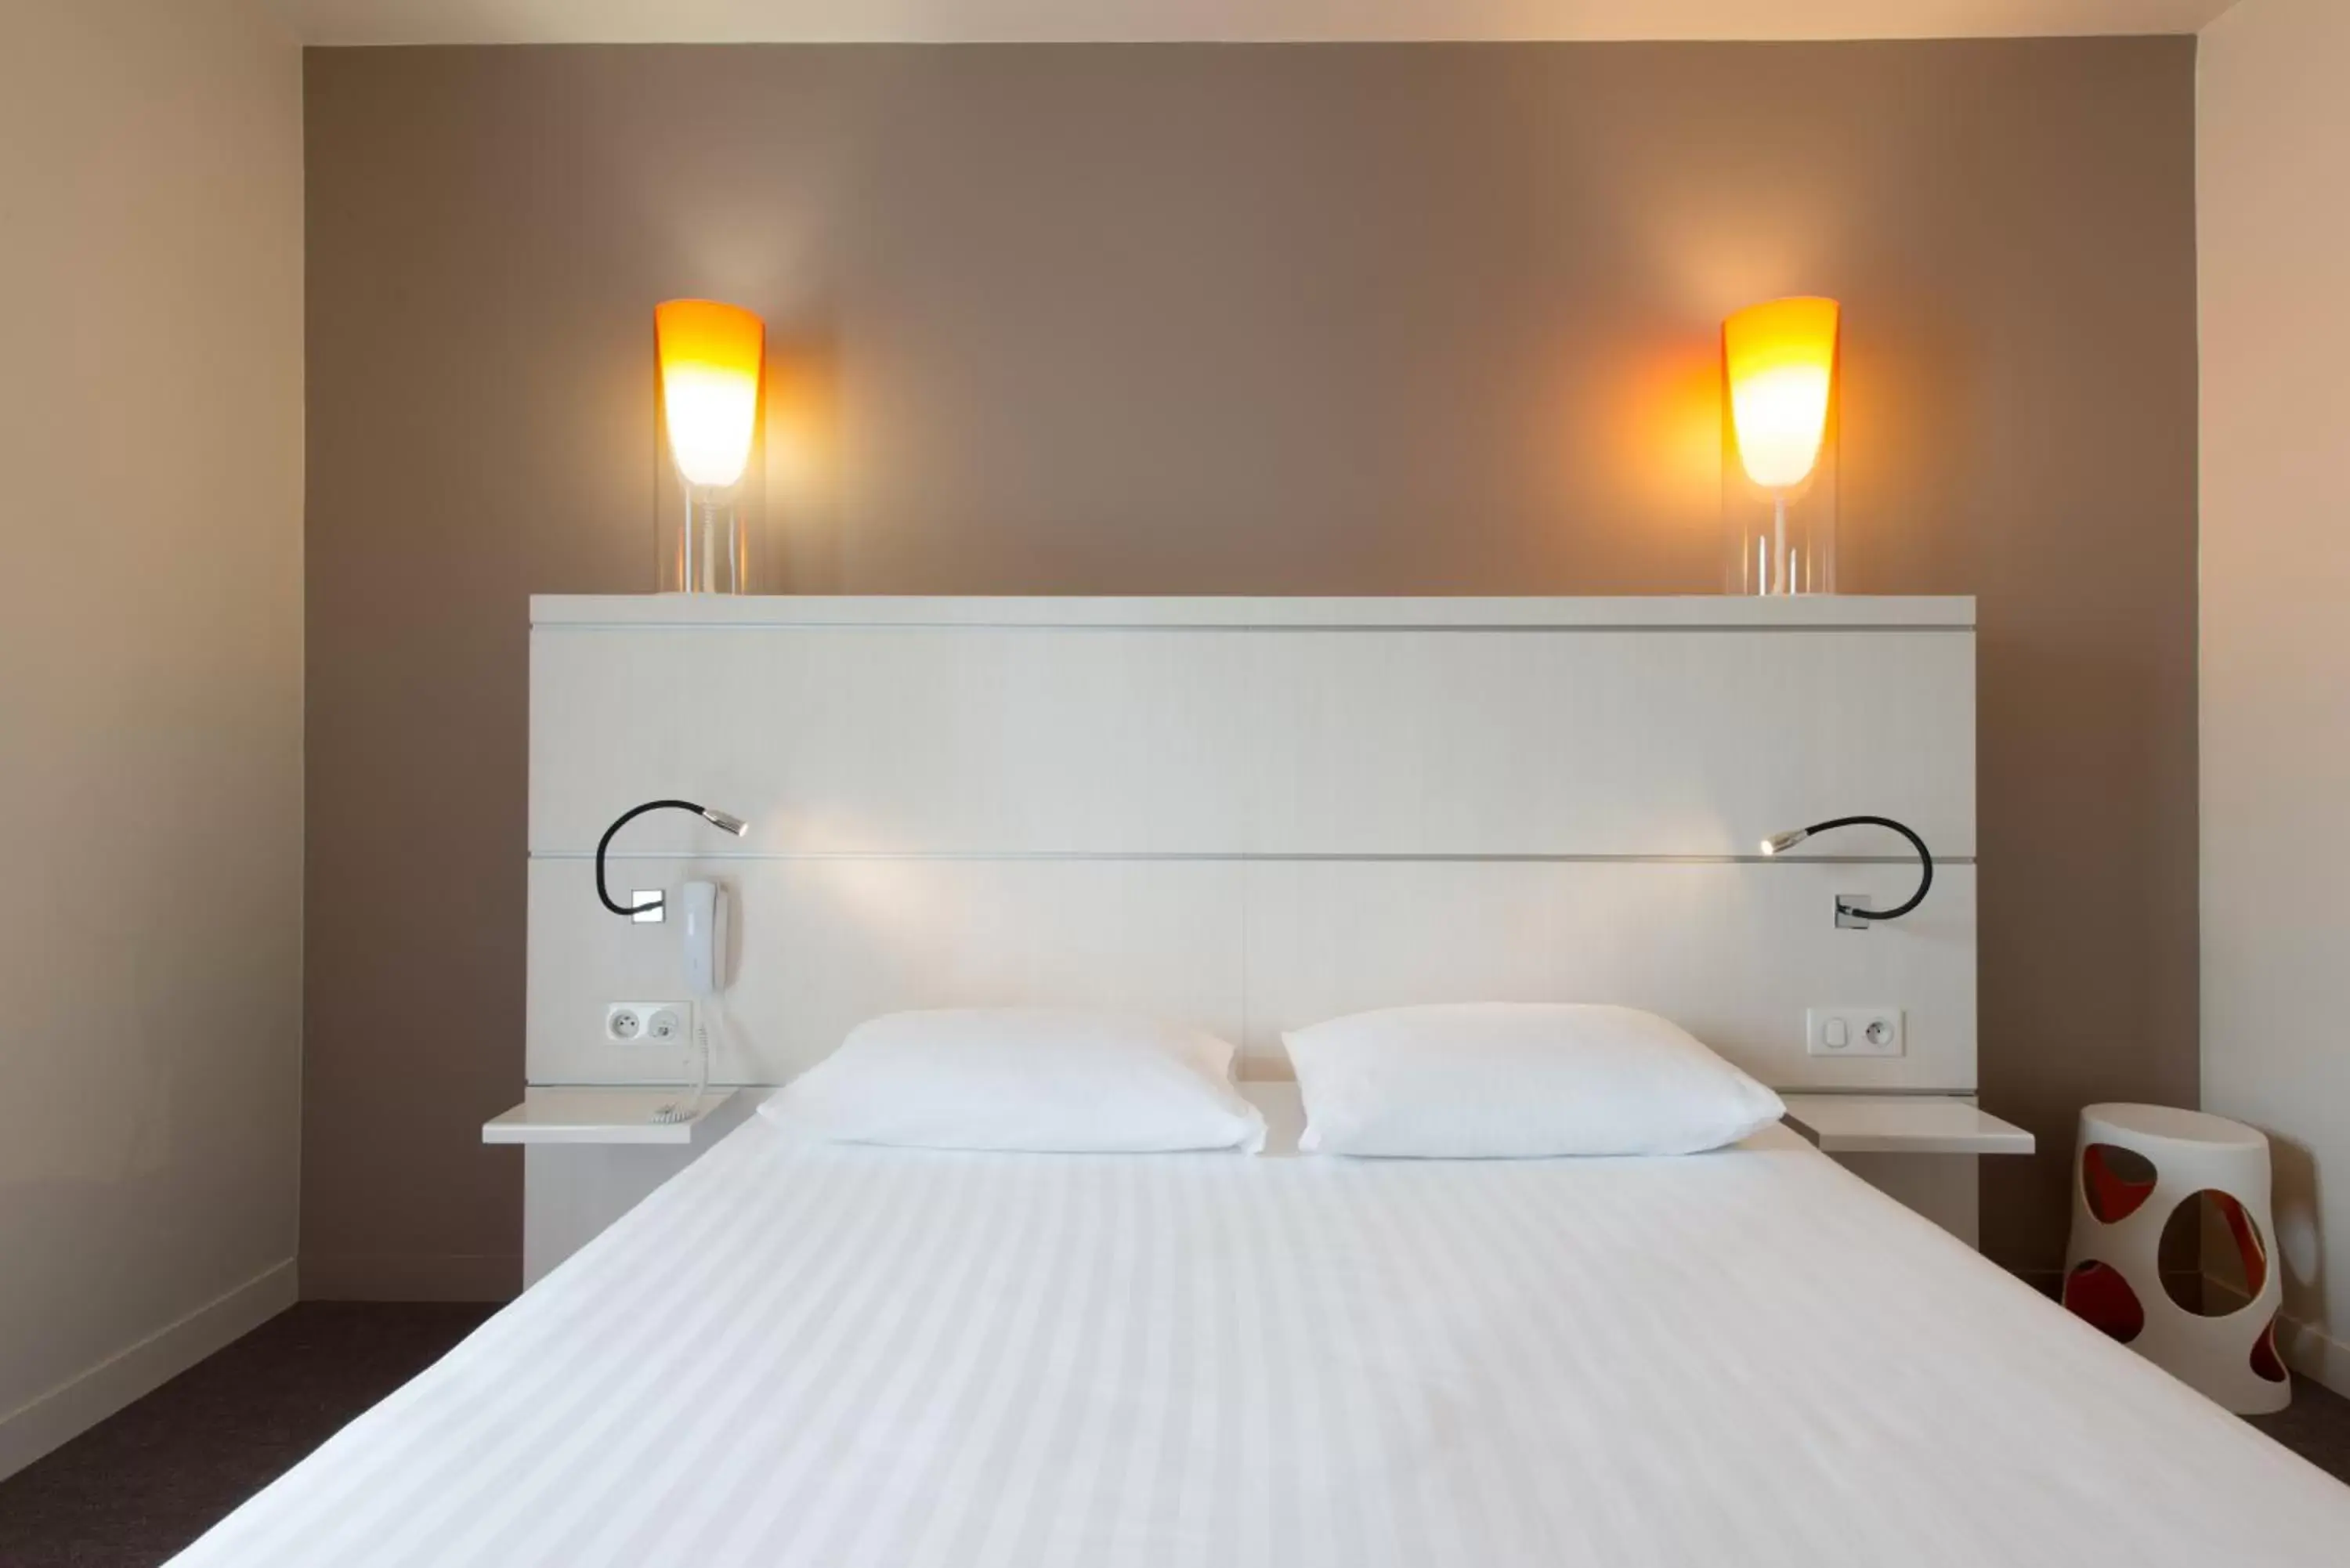 Bed, Room Photo in Kyriad La Rochelle Centre - Les Minimes